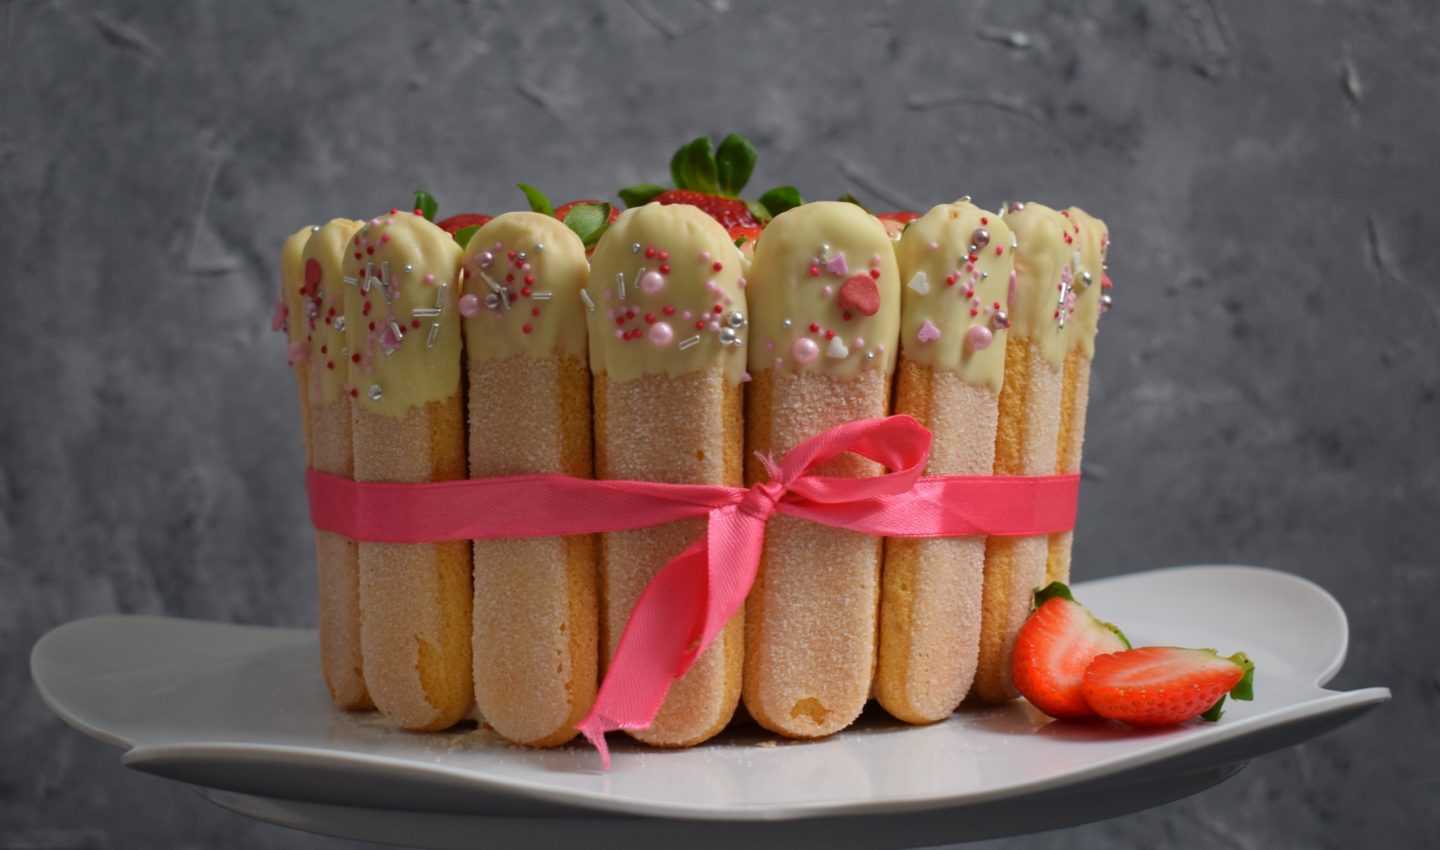 Erdbeer Tiramisu Torte 3 1440x850 - Erdbeer-Tiramisu Torte / Geburtstagstorte 2019